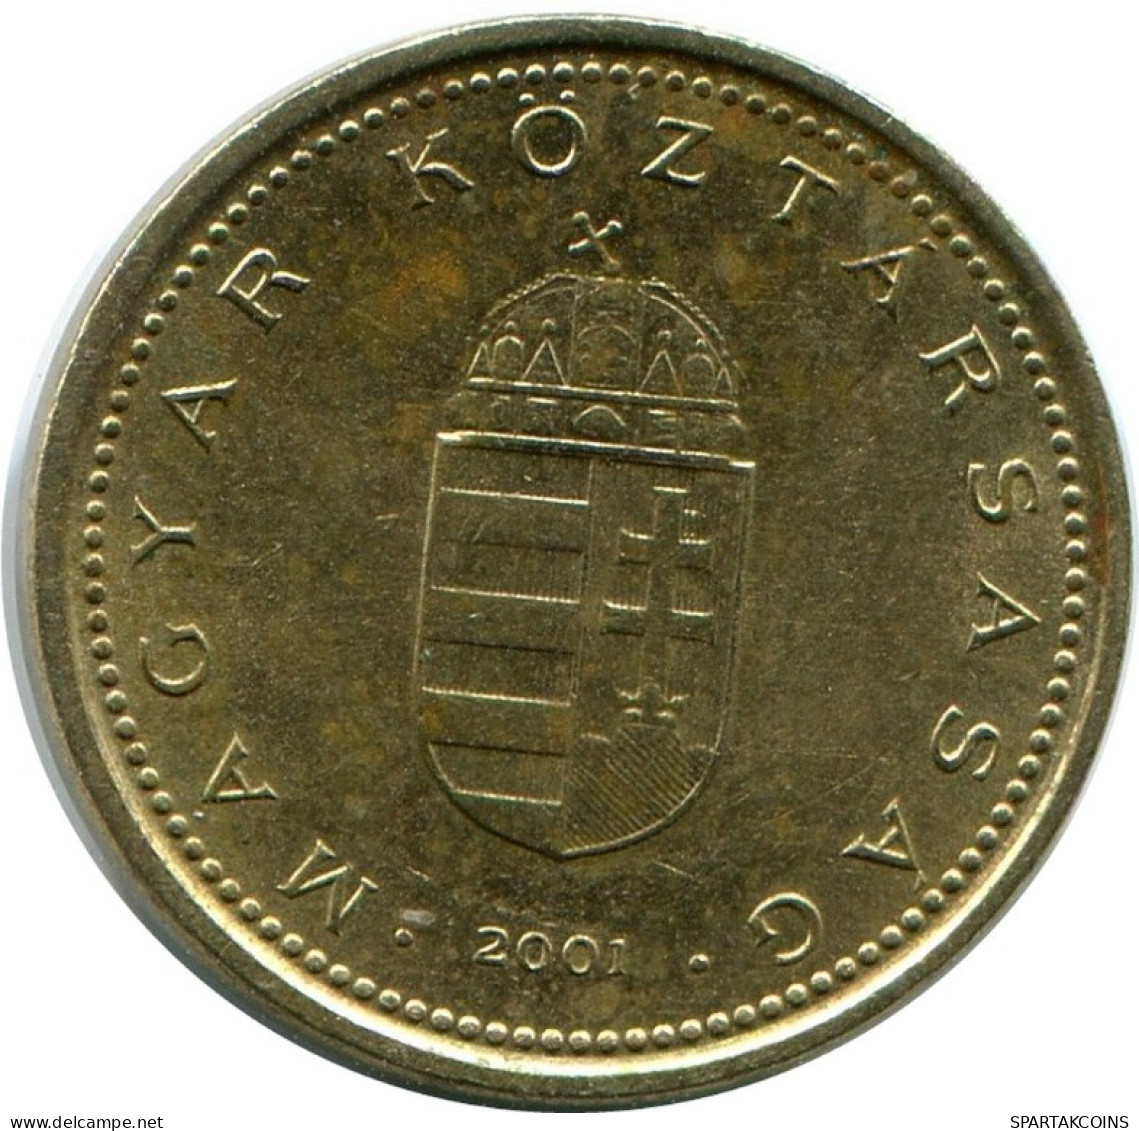 1 FORINT 2001 HUNGARY Coin #AH922.U.A - Hungary